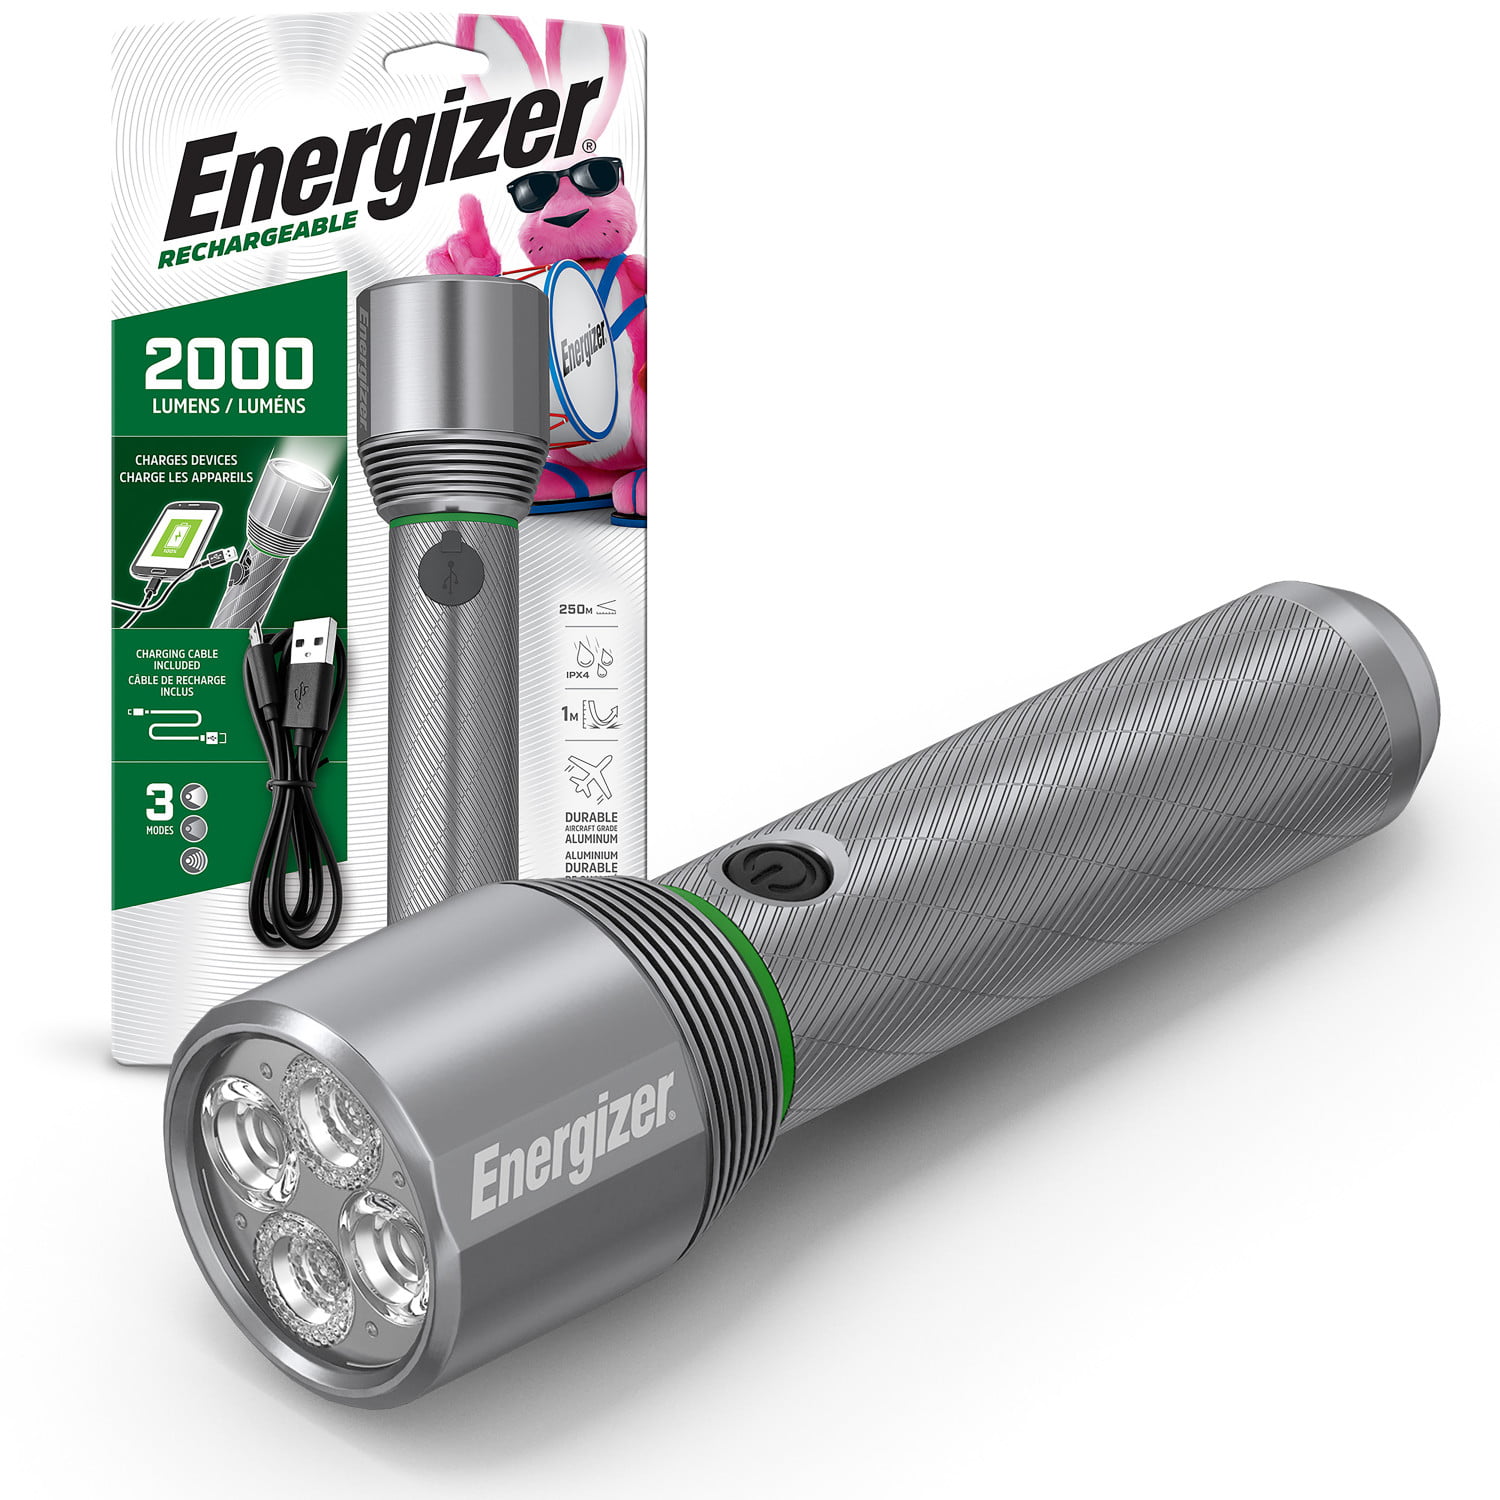 2 AAA Batteries 2x Energizer LED Pen Light Torch Flashlight Metal Pen 